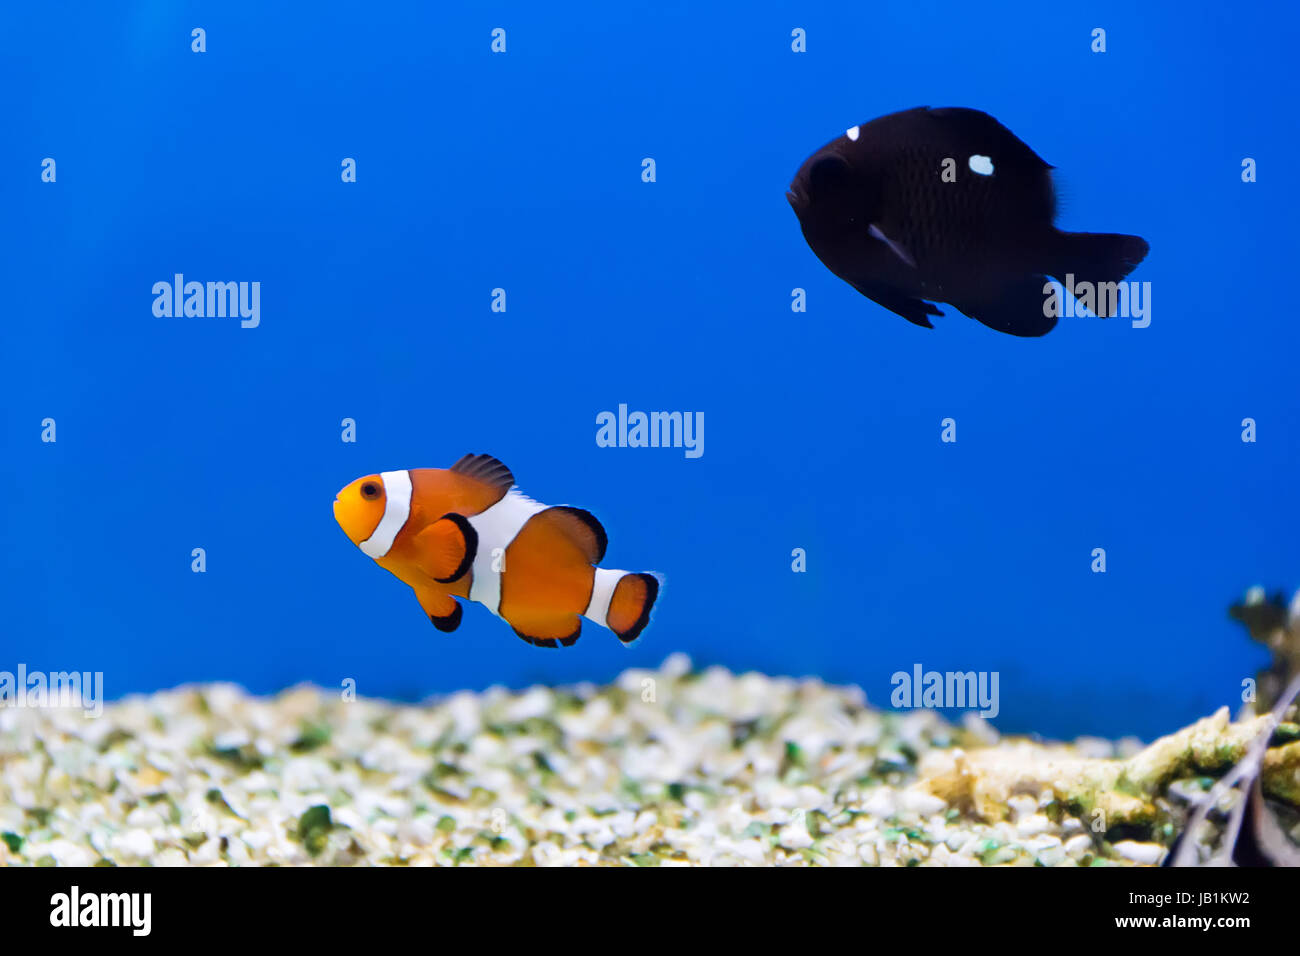 Image of clown fish and dascyllus in aquarium water Stock Photo